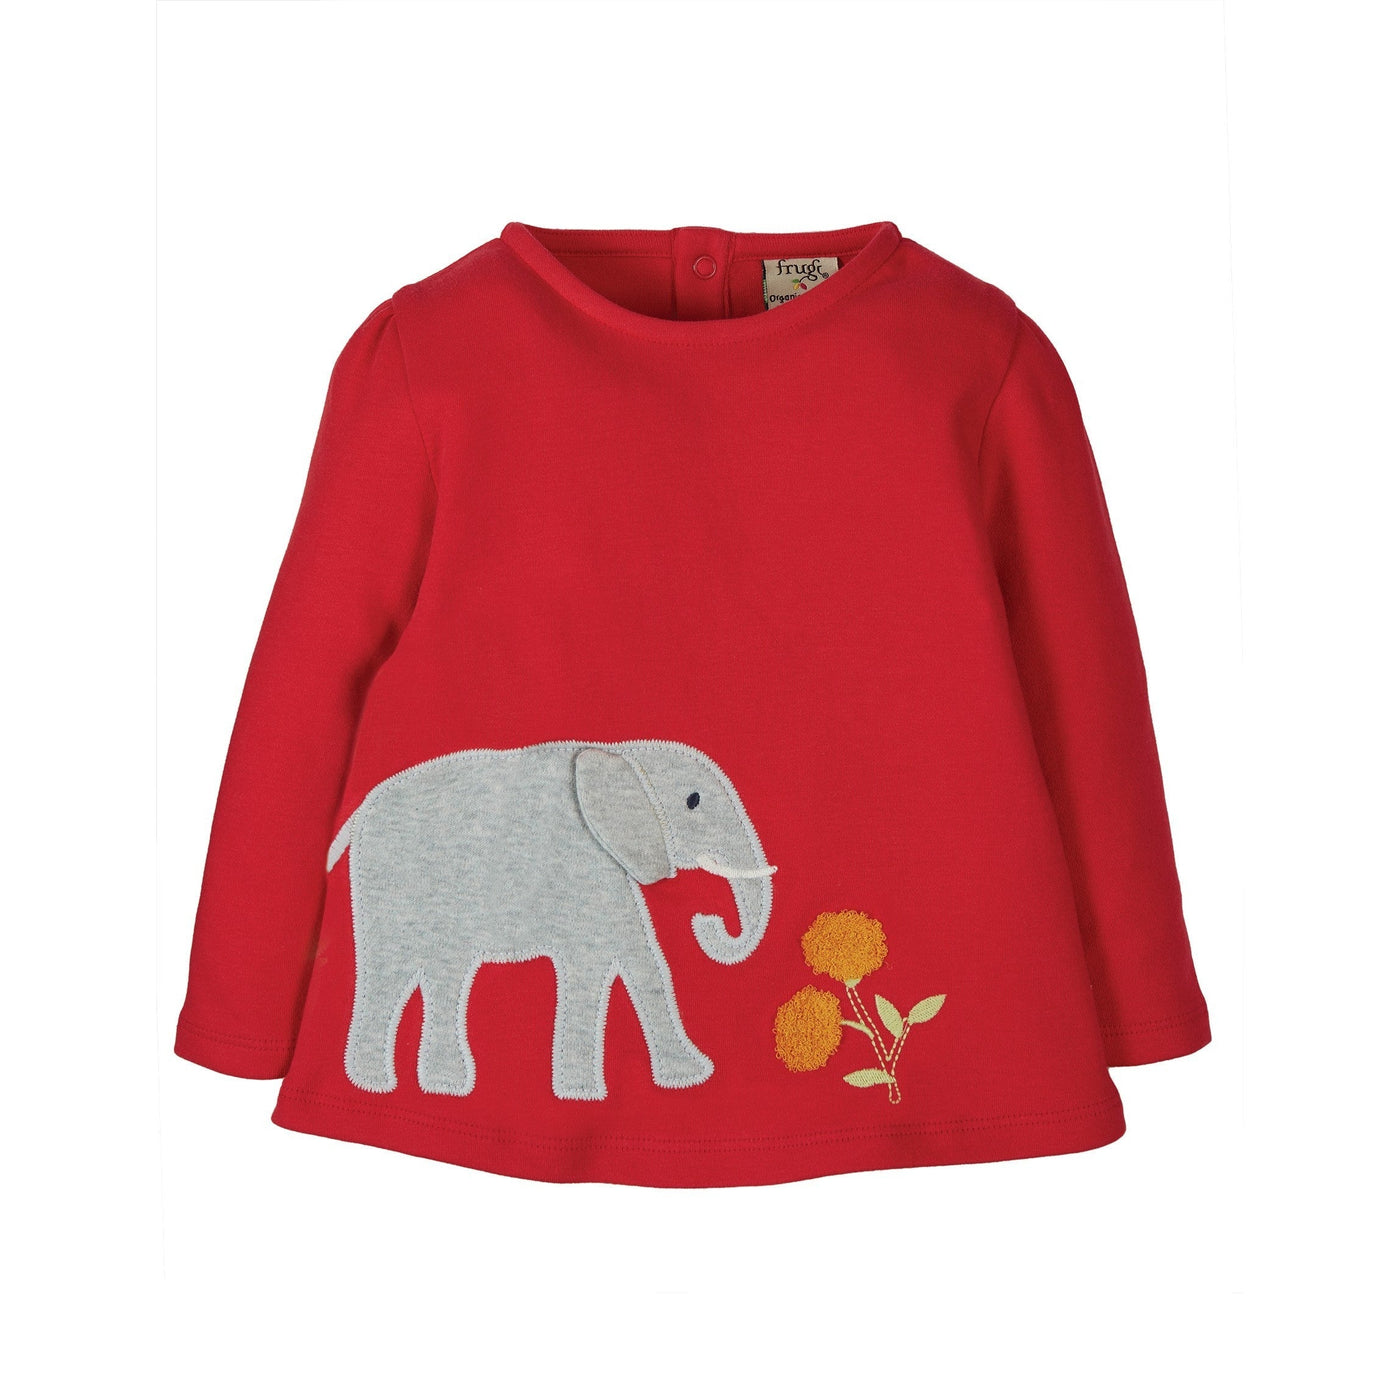 Connie Applique Top - True Red-Elephant by Frugi